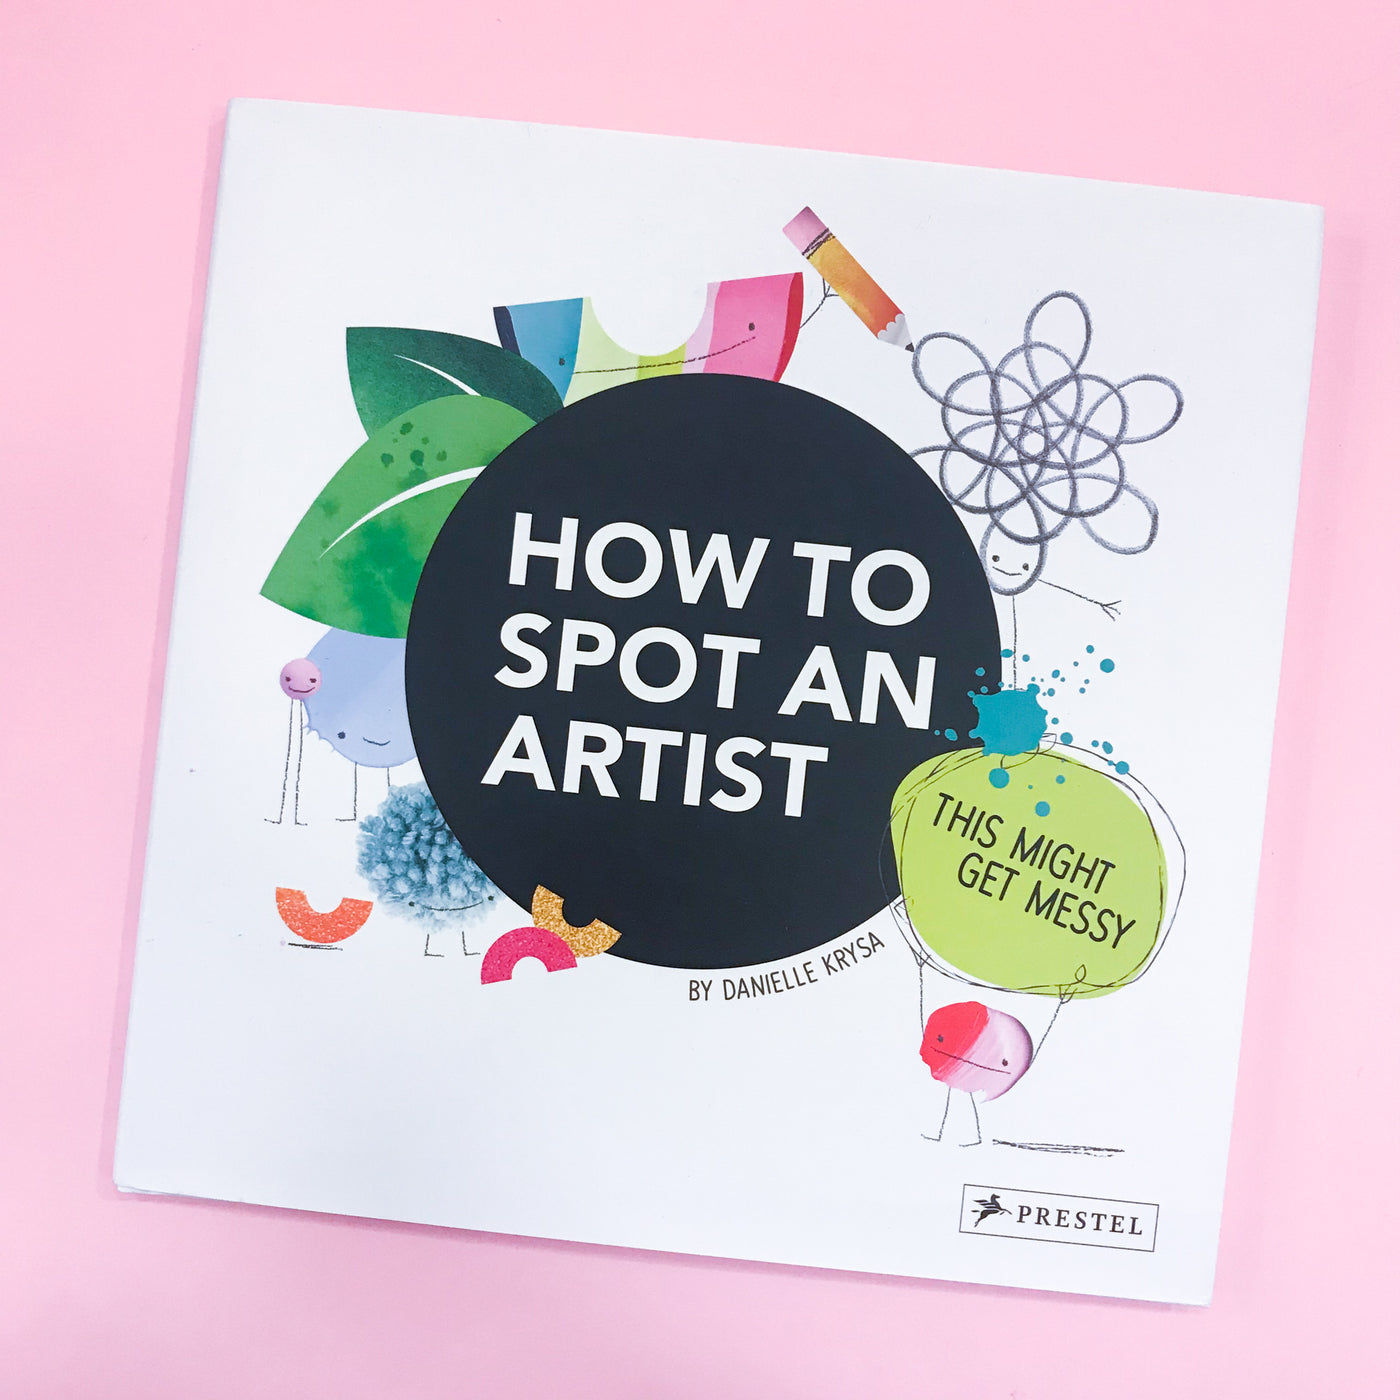 How To Spot An Artist by Danielle Krysa